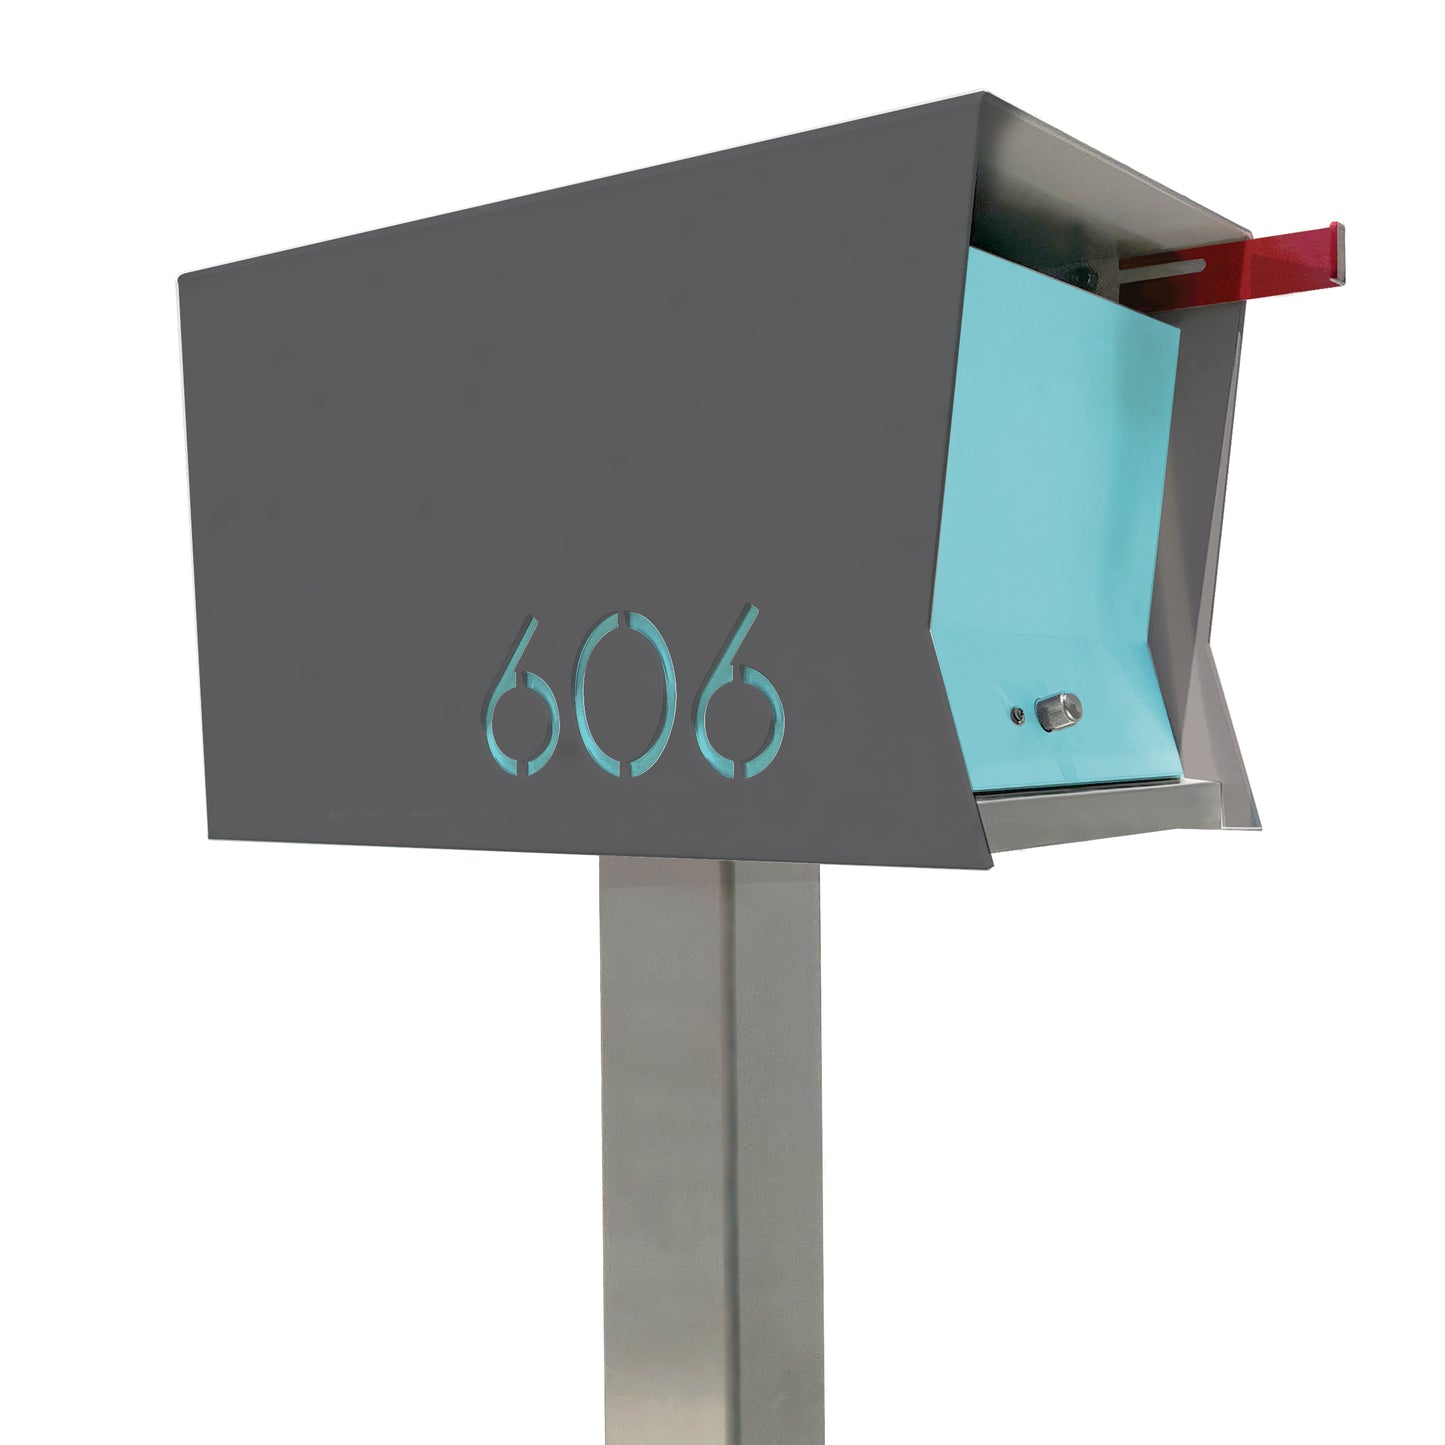 The Original Retrobox in DESIGNER GRAY - Modern Mailbox grey and cyan